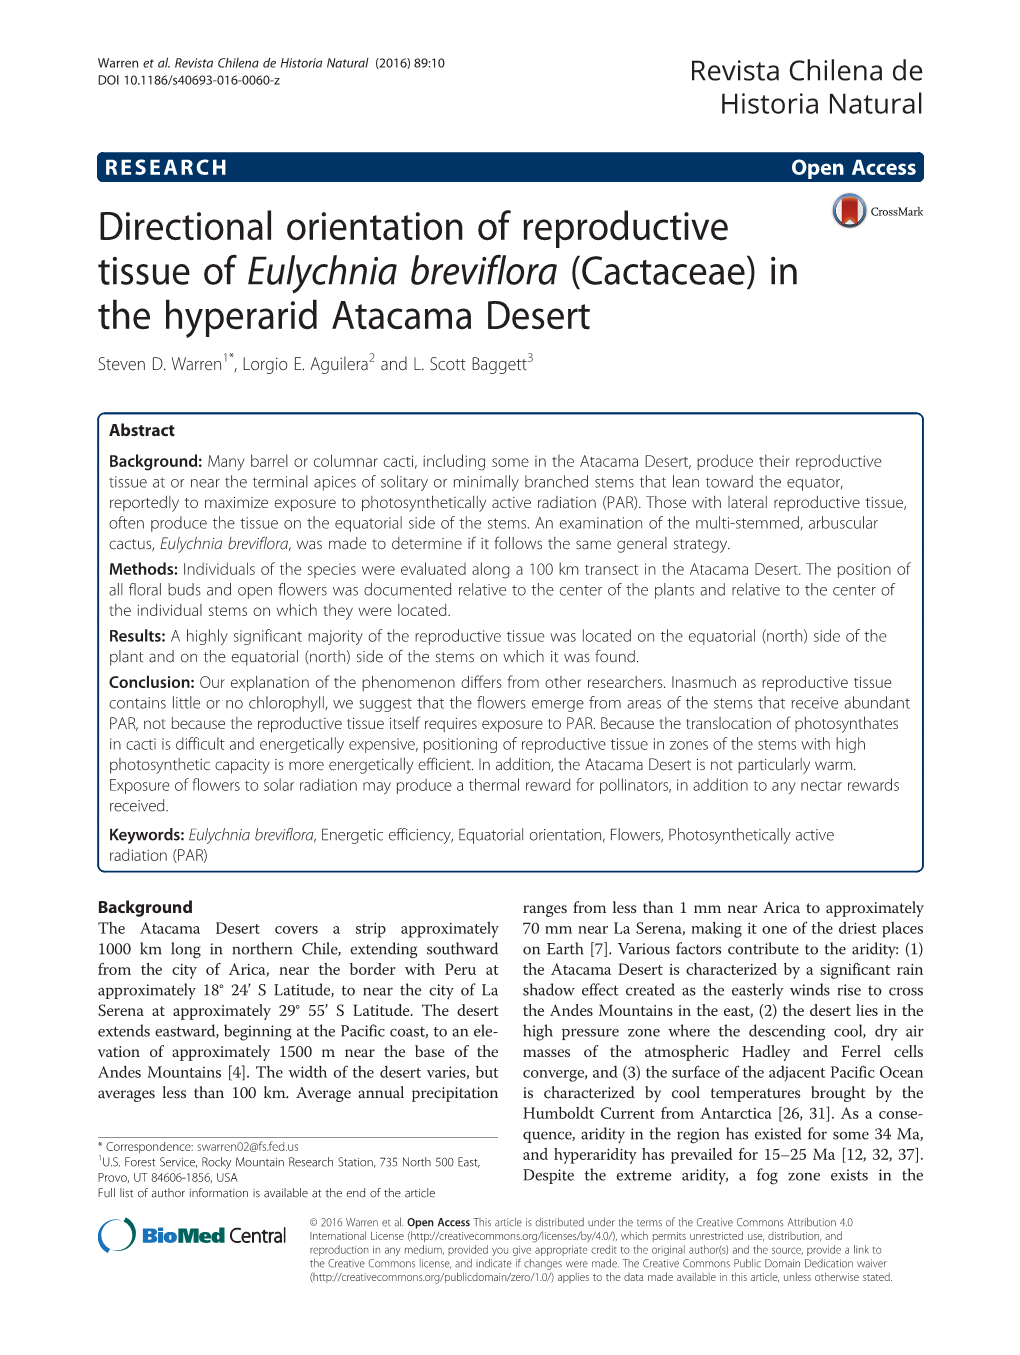 Directional Orientation of Reproductive Tissue of Eulychnia Breviflora (Cactaceae) in the Hyperarid Atacama Desert Steven D